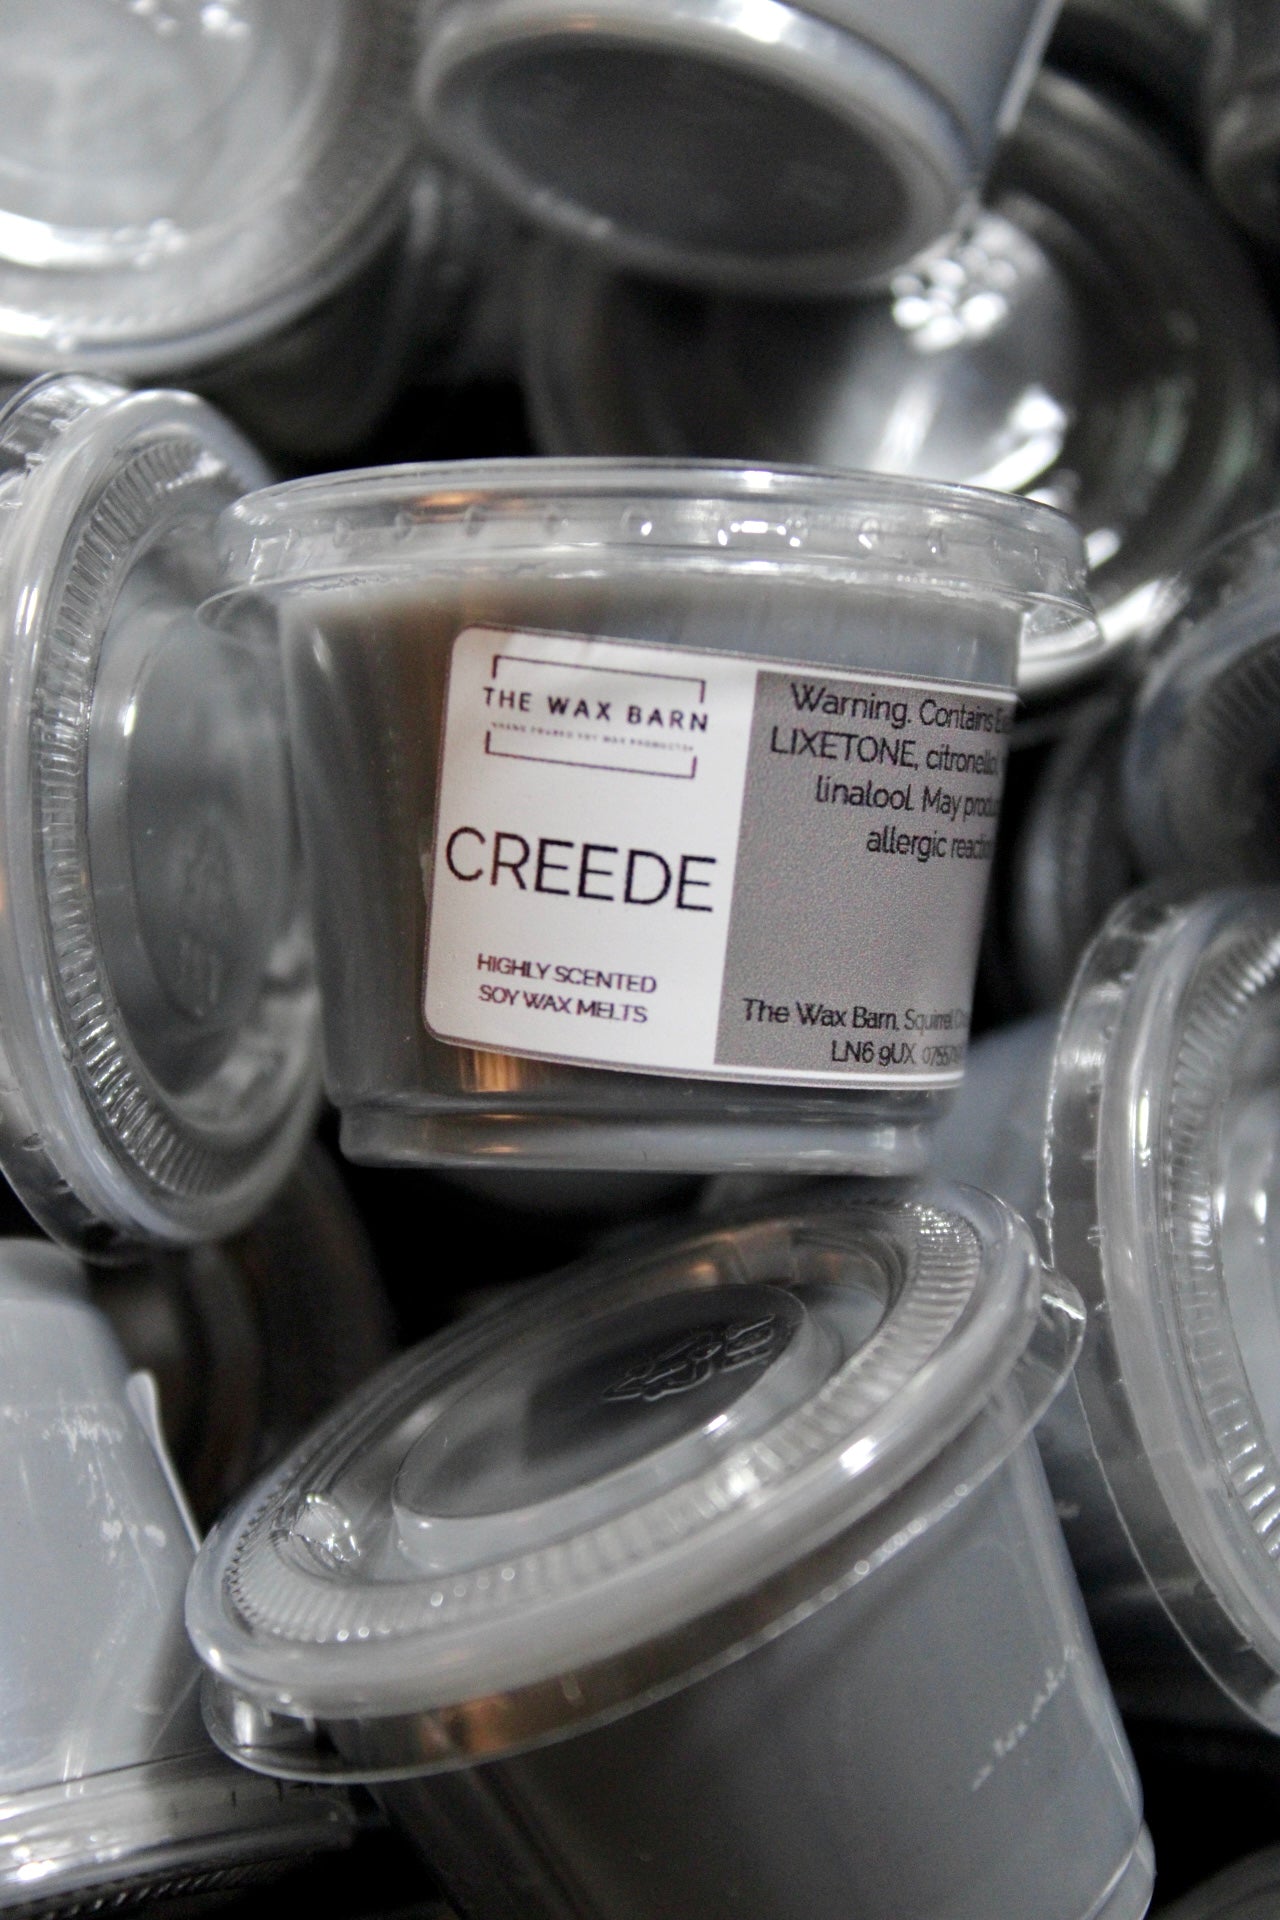 Creede (Creed Aventus Inspired) Sample Pot